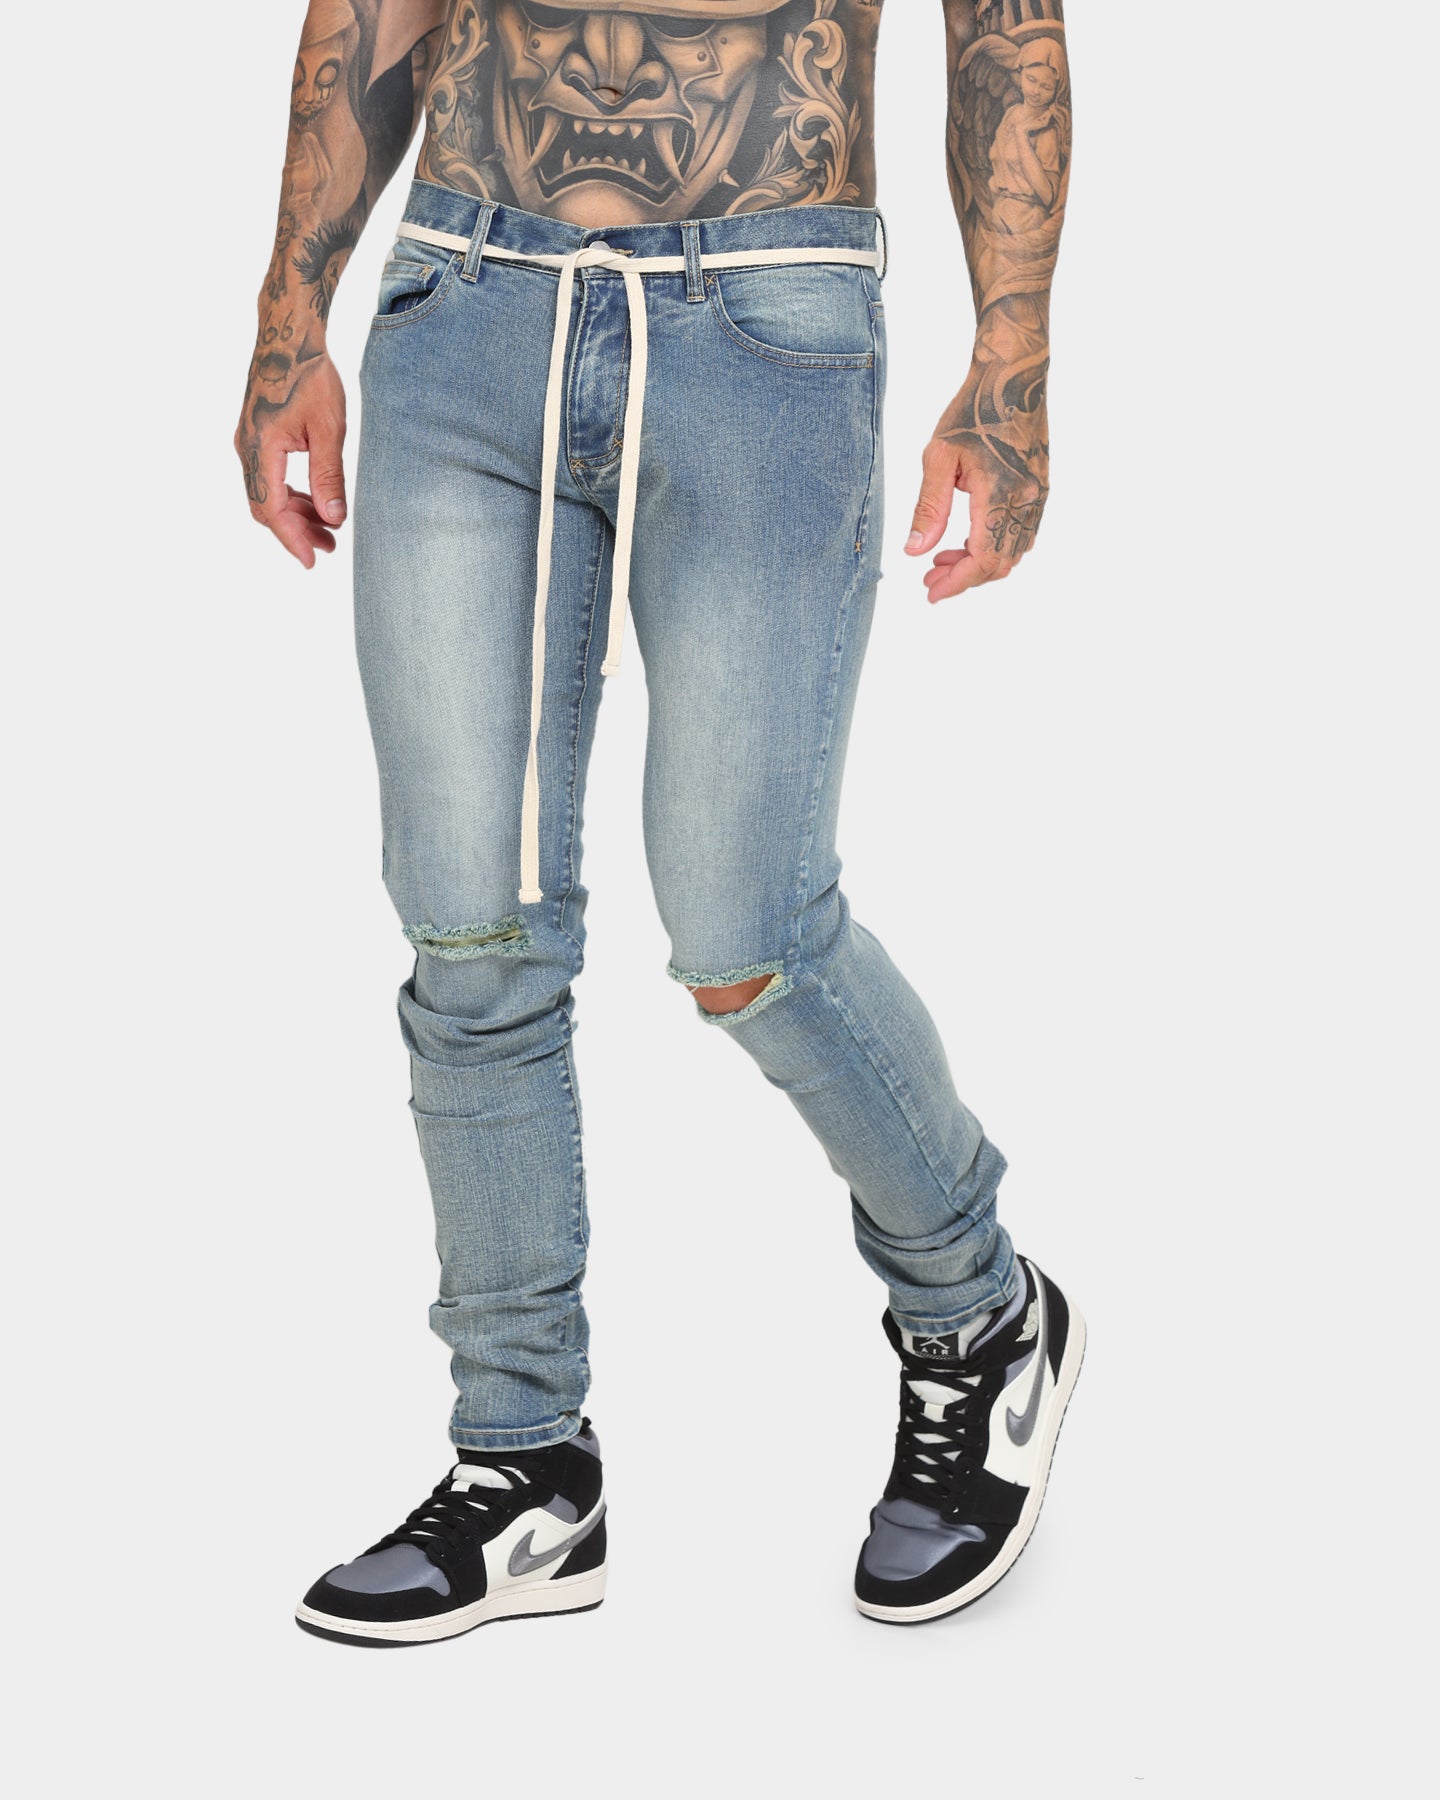 denim culture jeans mens